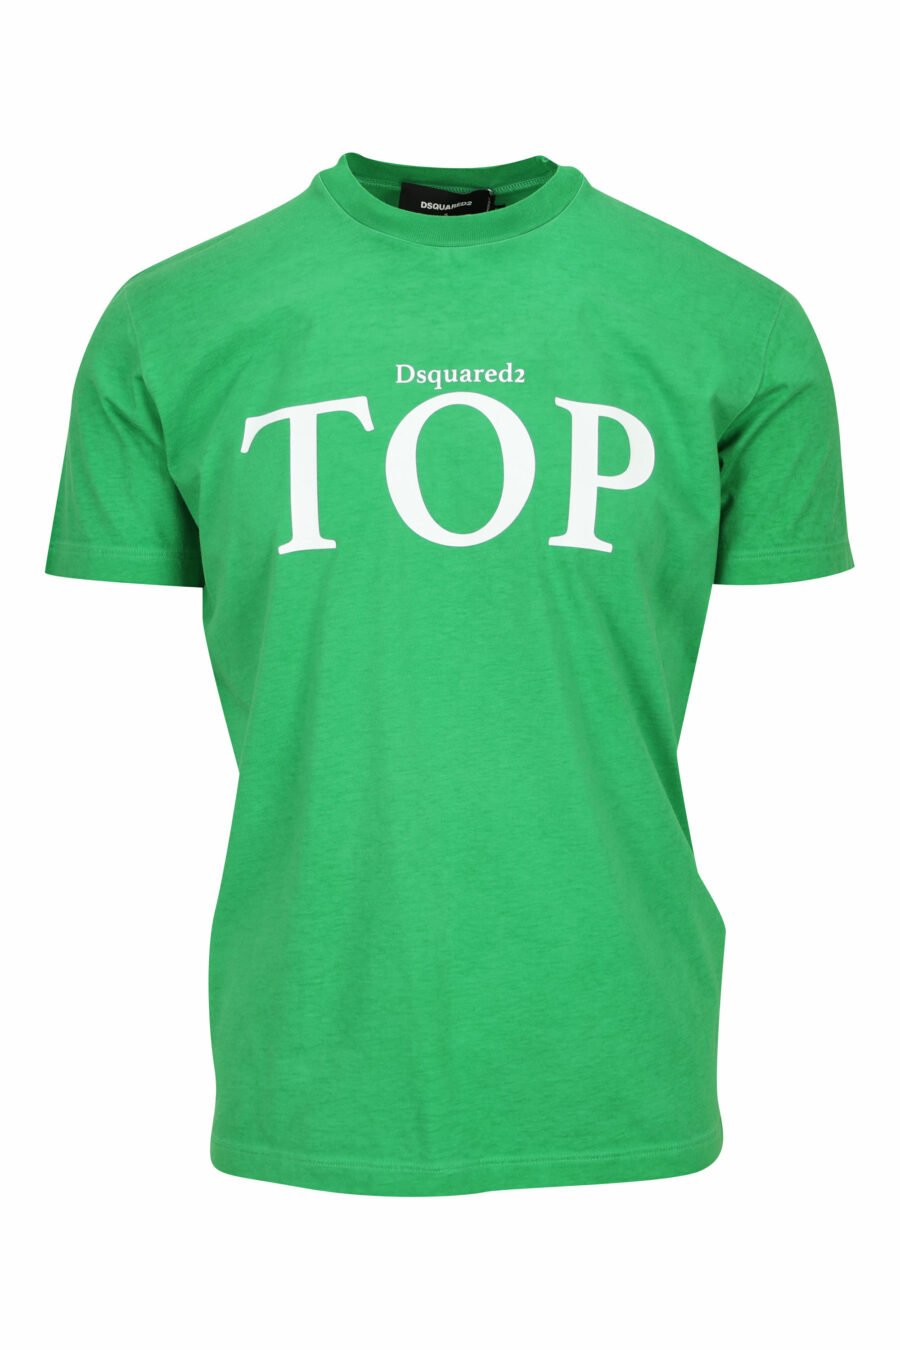 Grünes T-Shirt mit Maxitop - 8054148449322